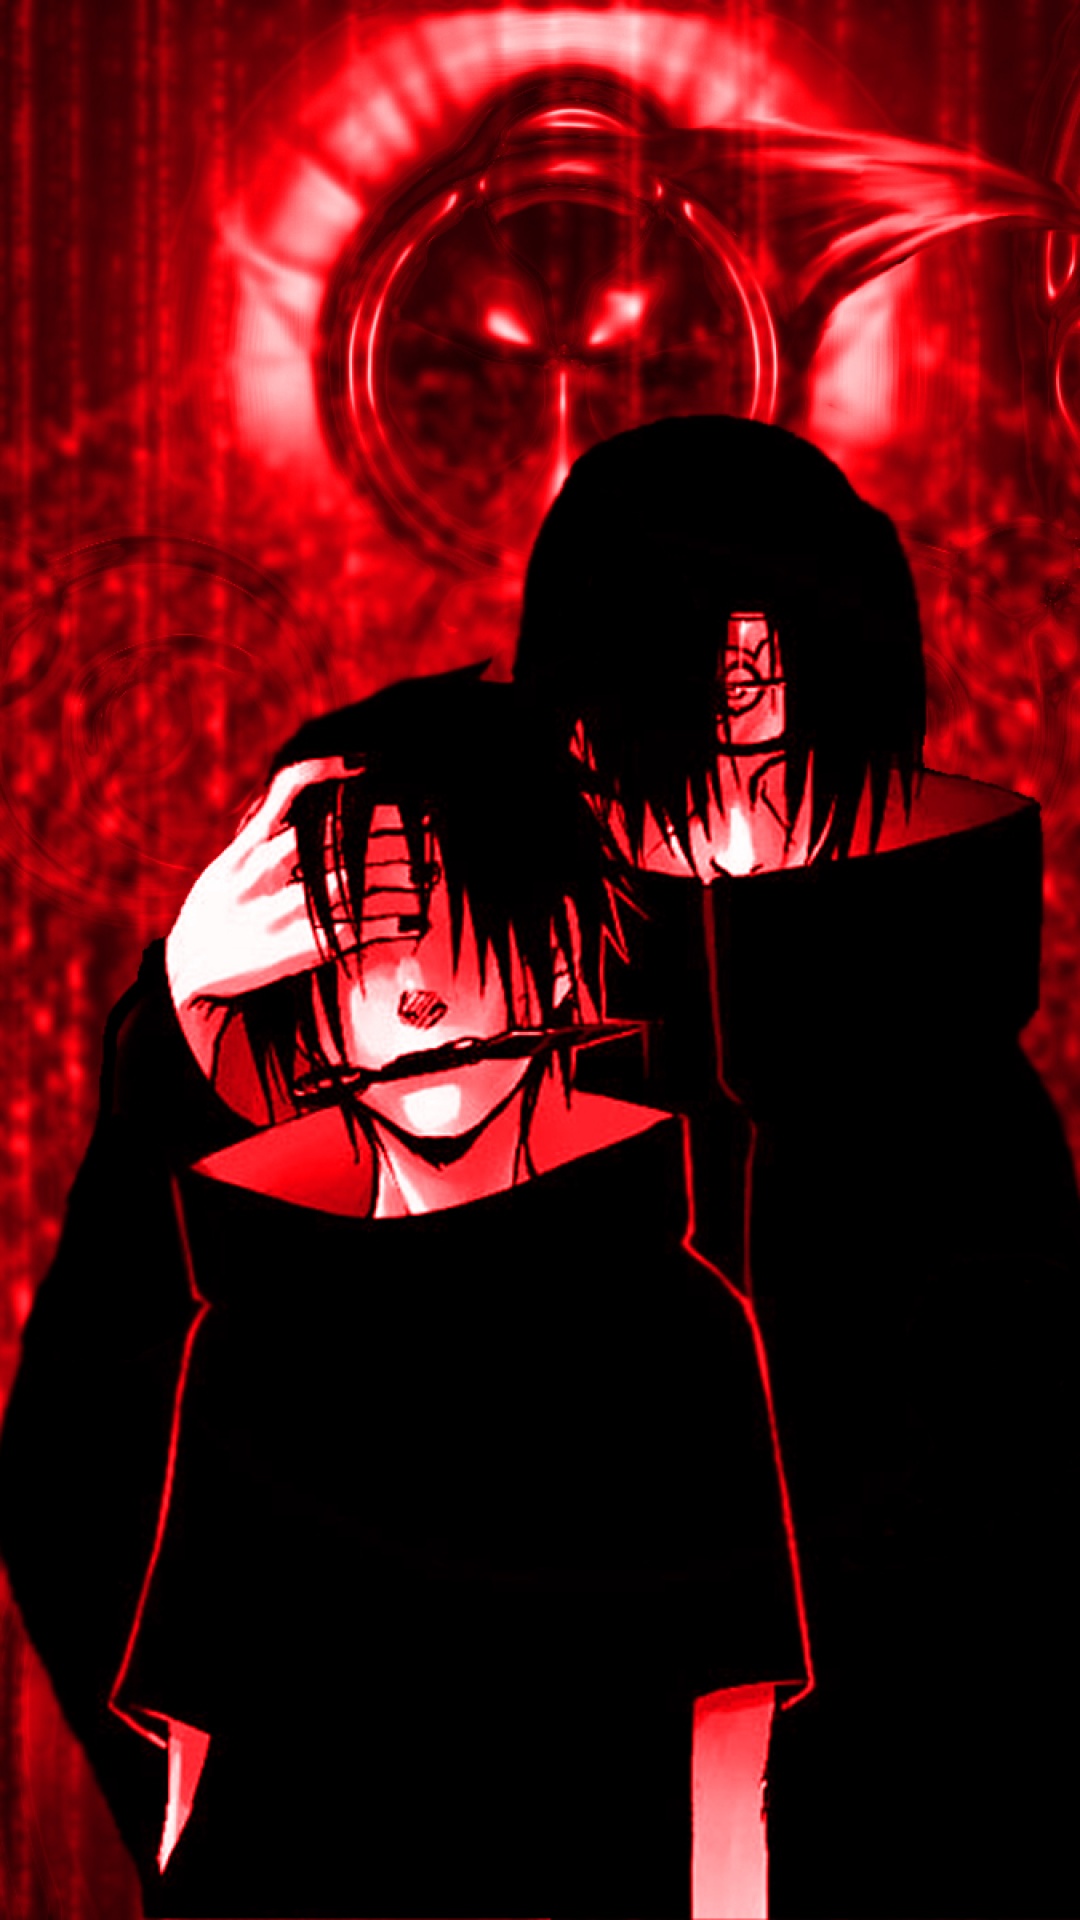 fond d'écran sasuke uchiha iphone,rouge,personnage fictif,illustration,supervillain,art